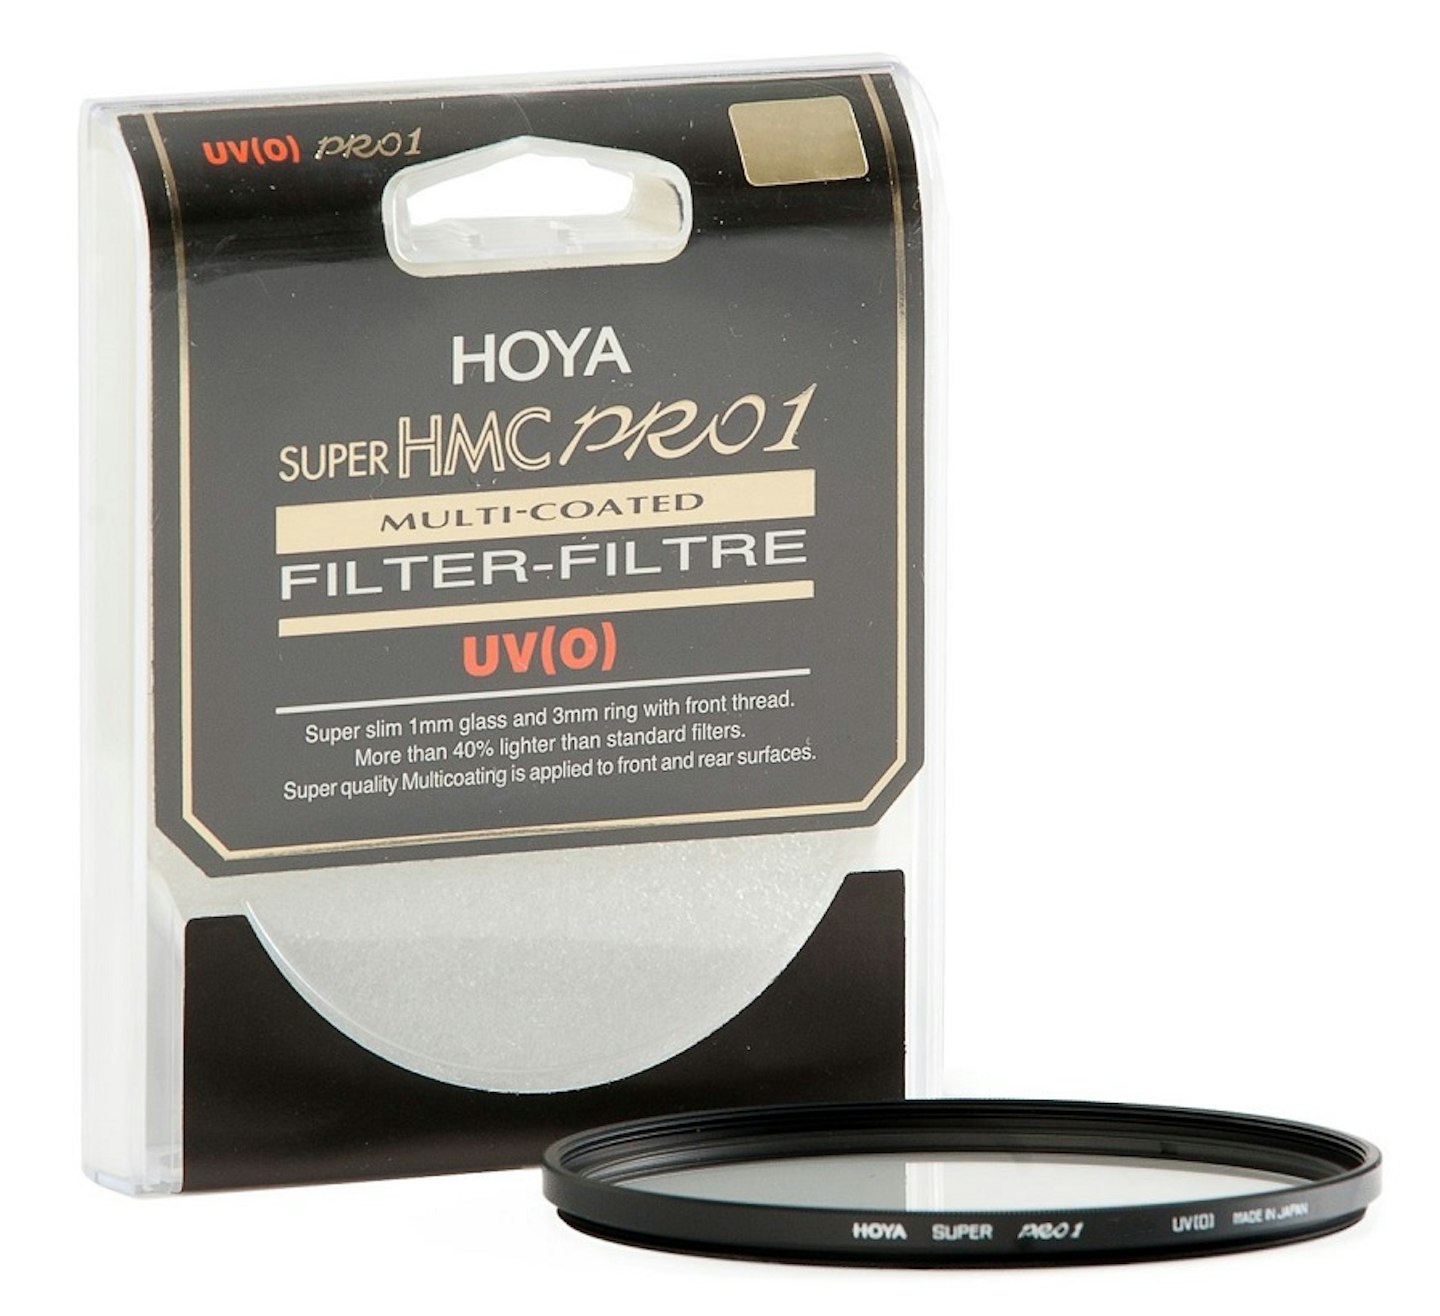 Hoya Revo Super Pro1 D